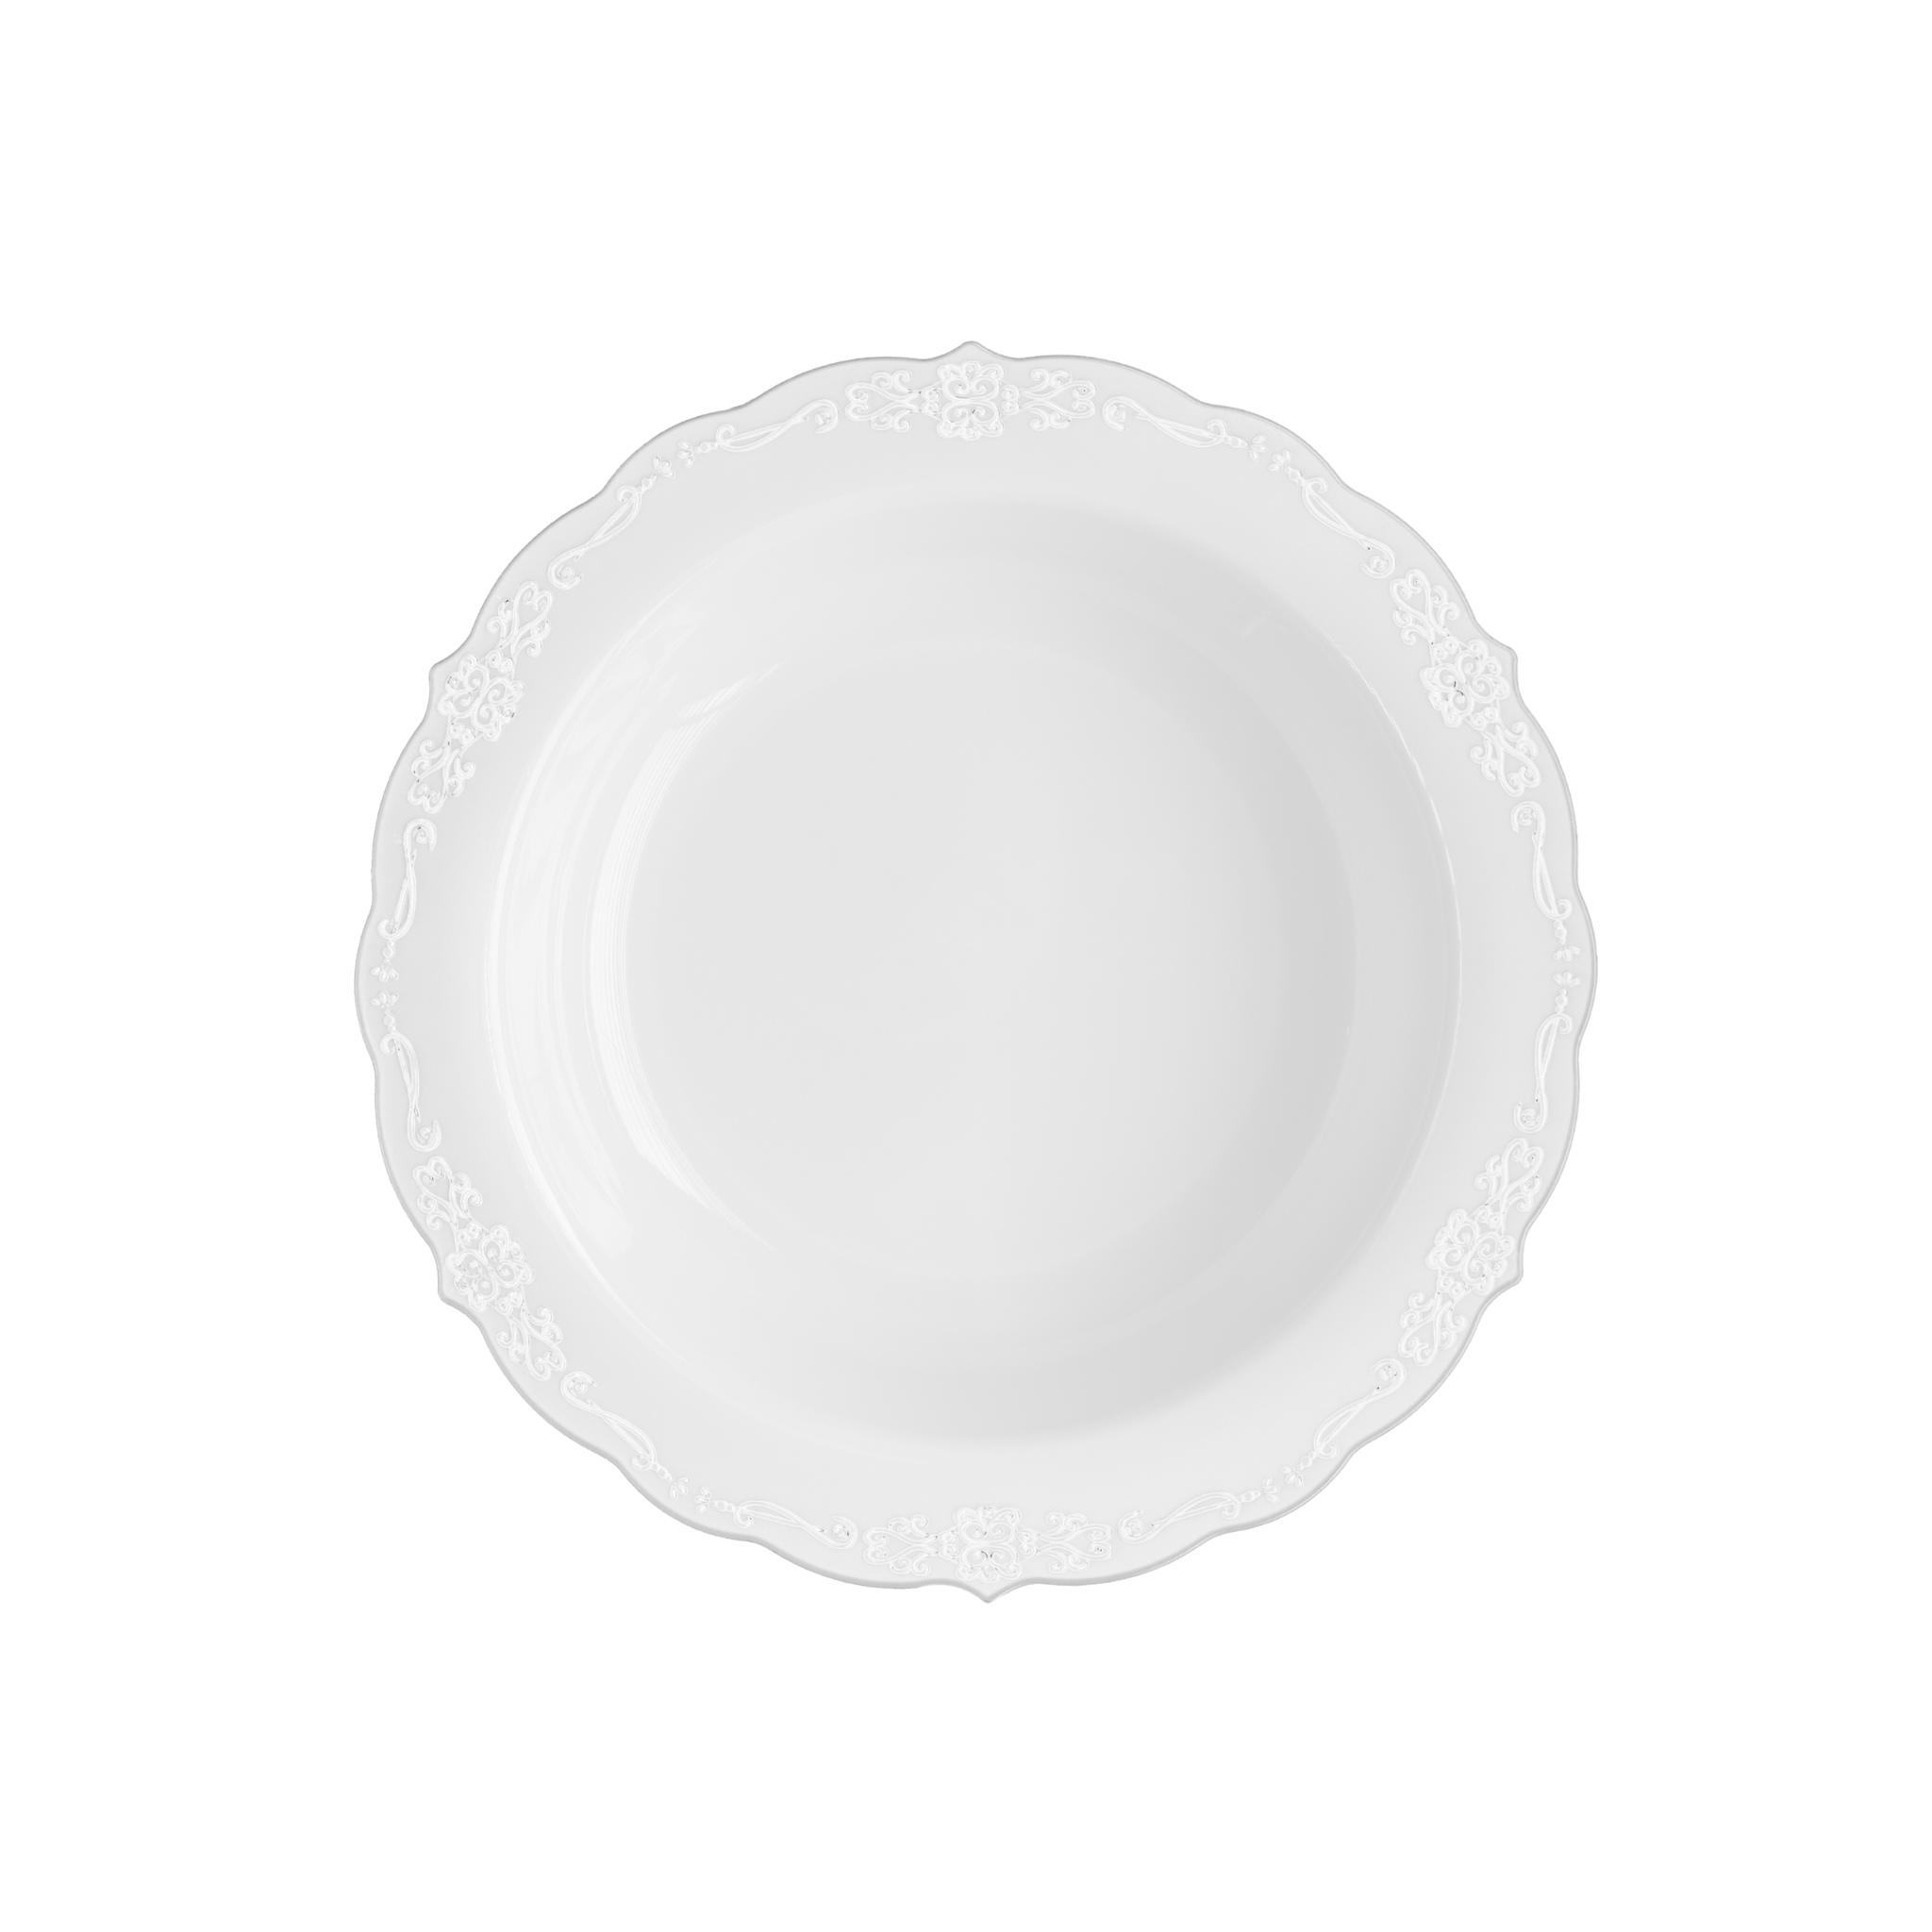 12 oz. Clear Victorian Design Plastic Bowls (120 Count)